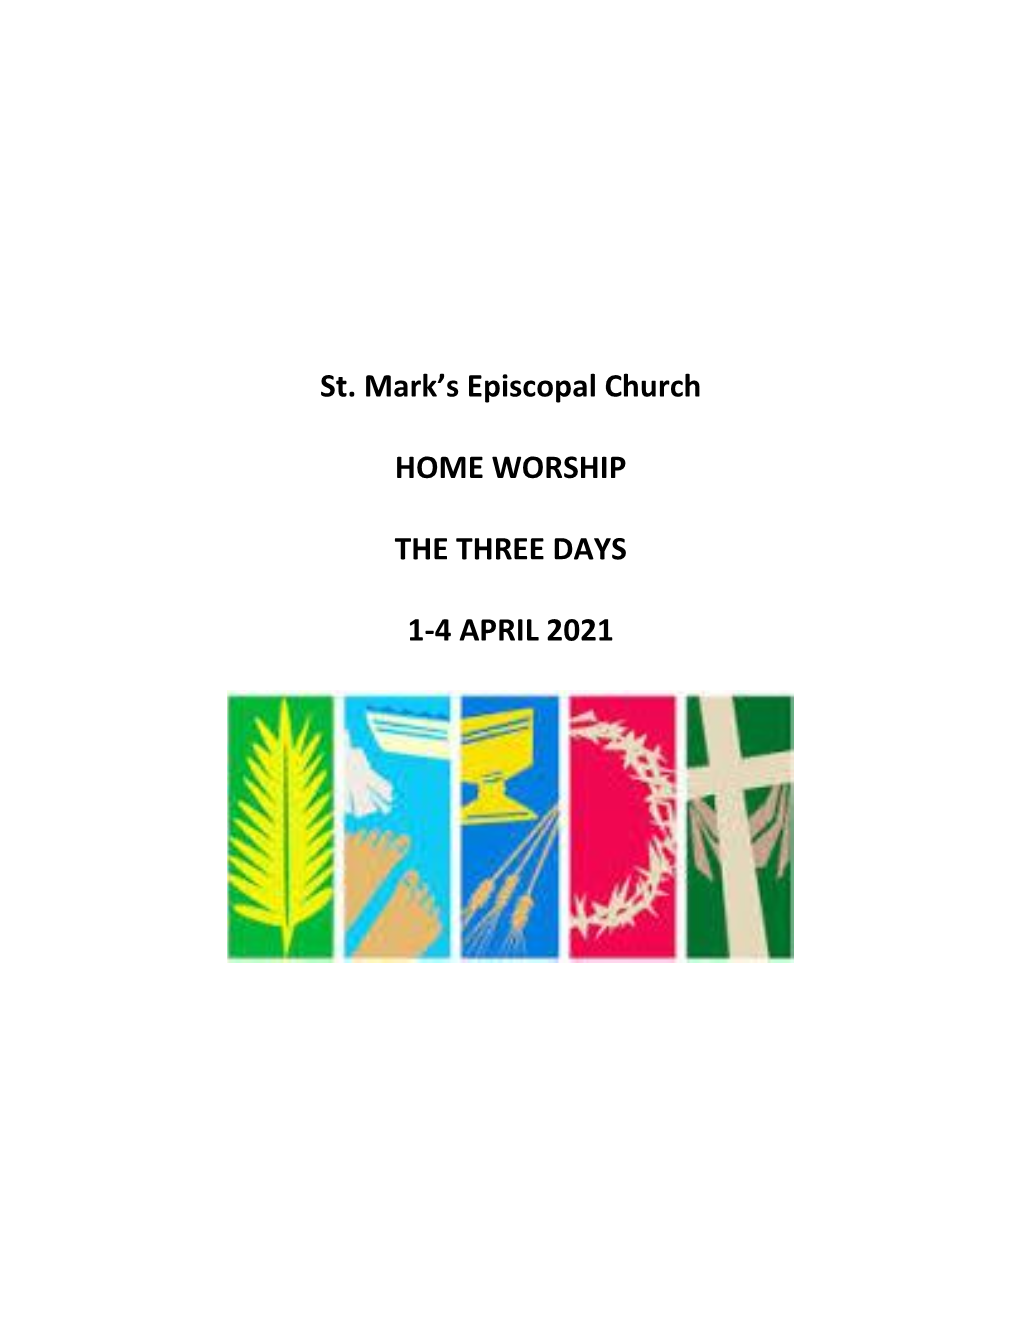 St. Mark's Episcopal Church HOME WORSHIP the THREE DAYS 1-4